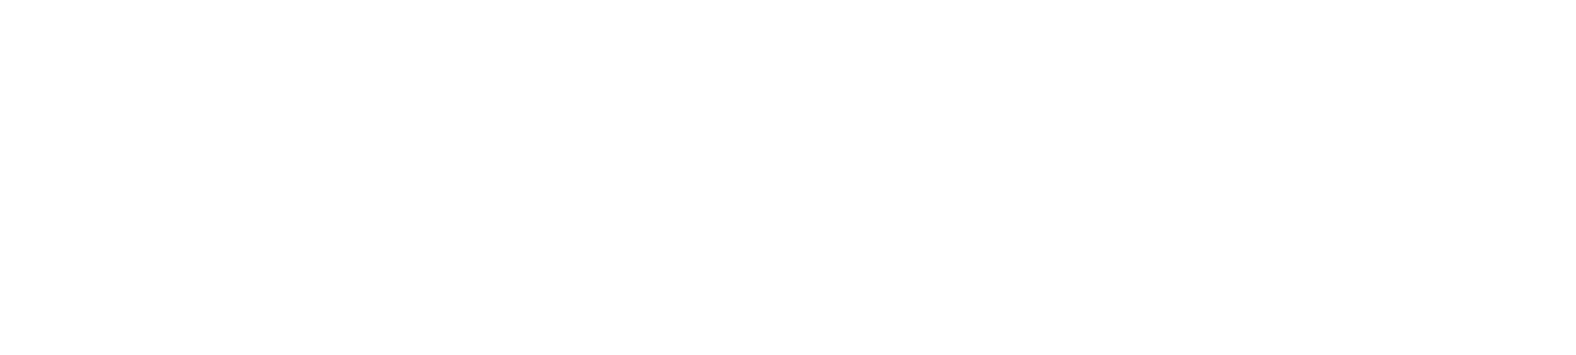 Docebo Logo groß für dunkle Hintergründe (transparentes PNG)